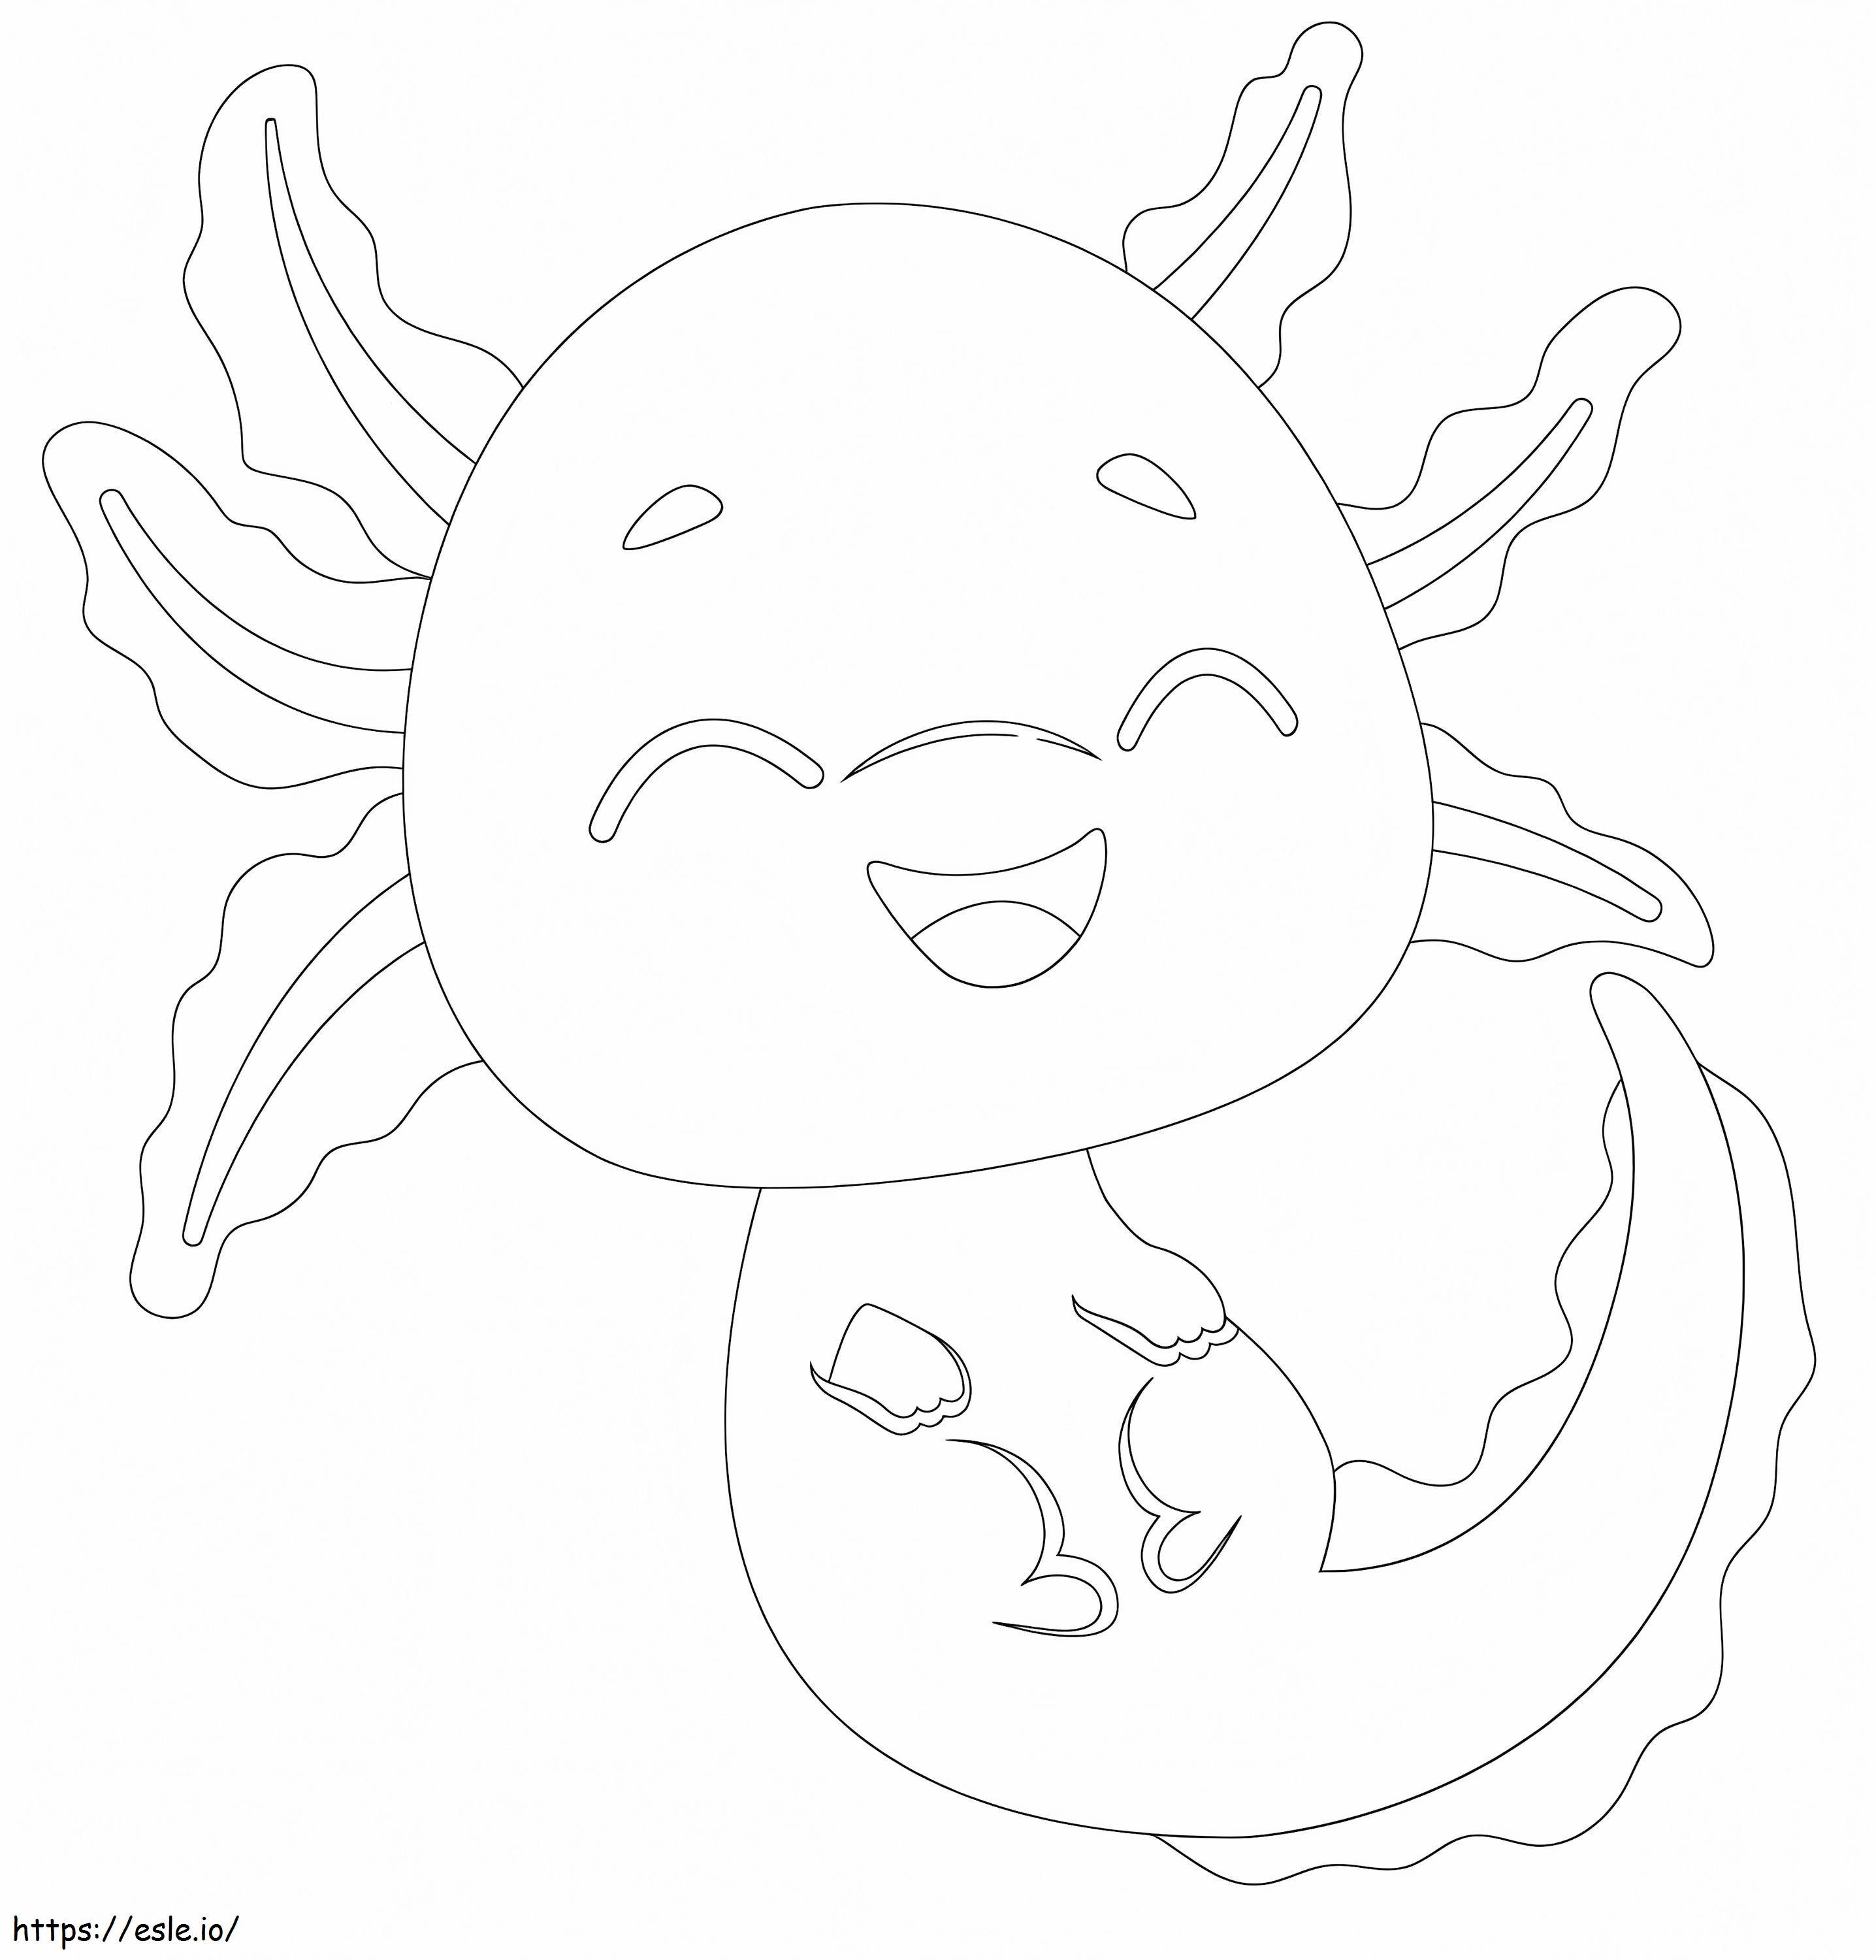 Baby Axolotl coloring page